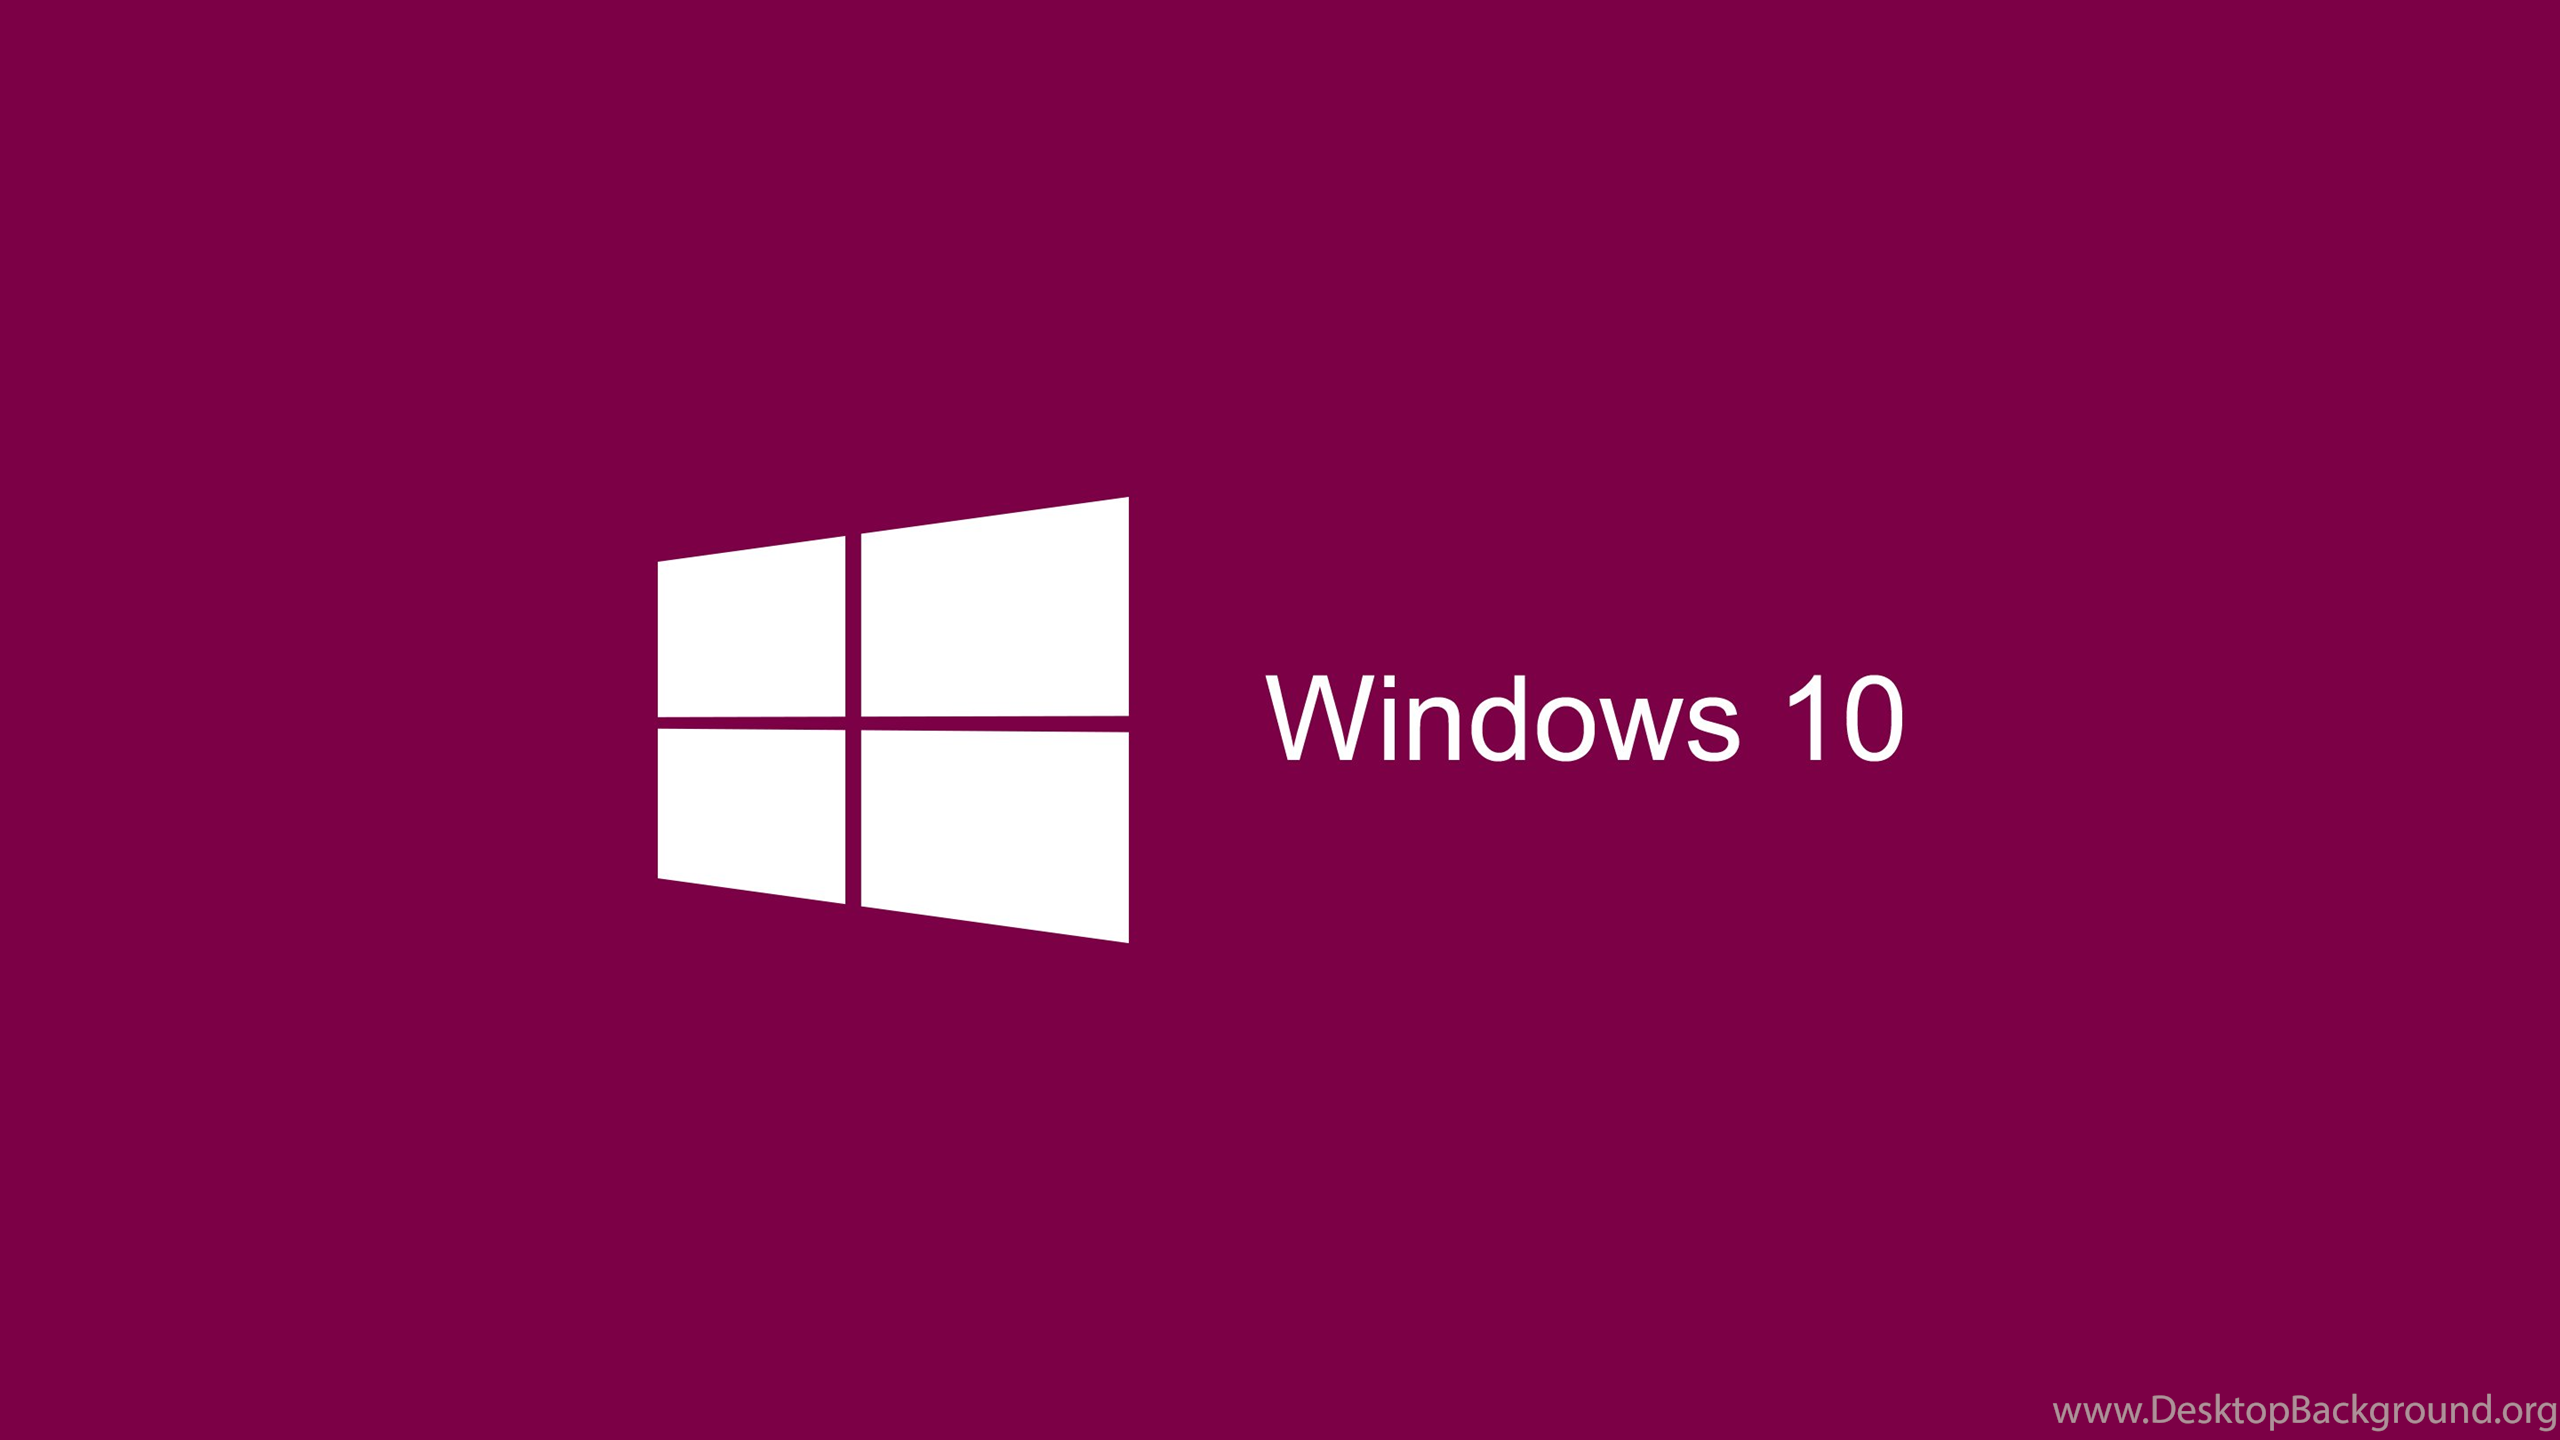 Windows 10 Full Hd Wallpapers Free Download Desktop Background